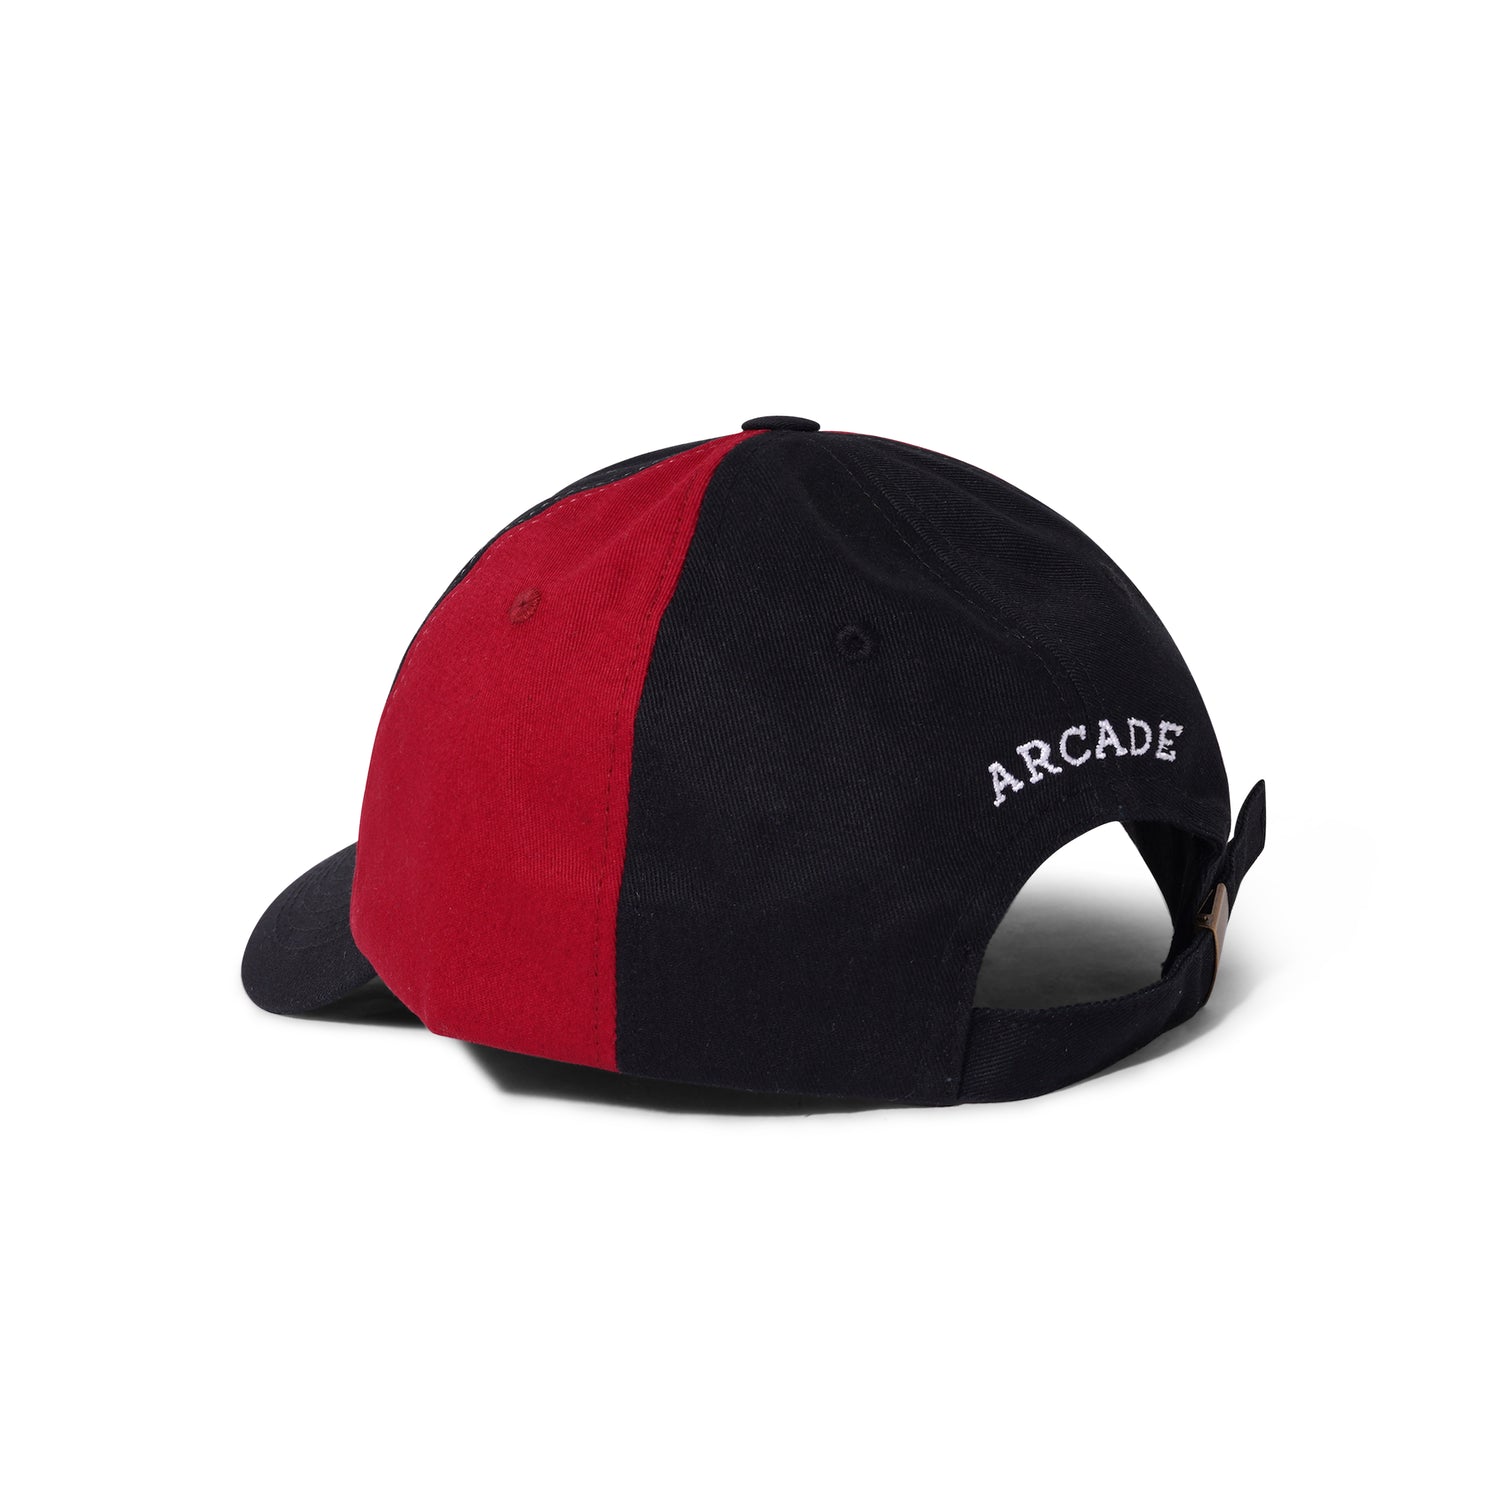 A Hat, Cream / Red / Black / White